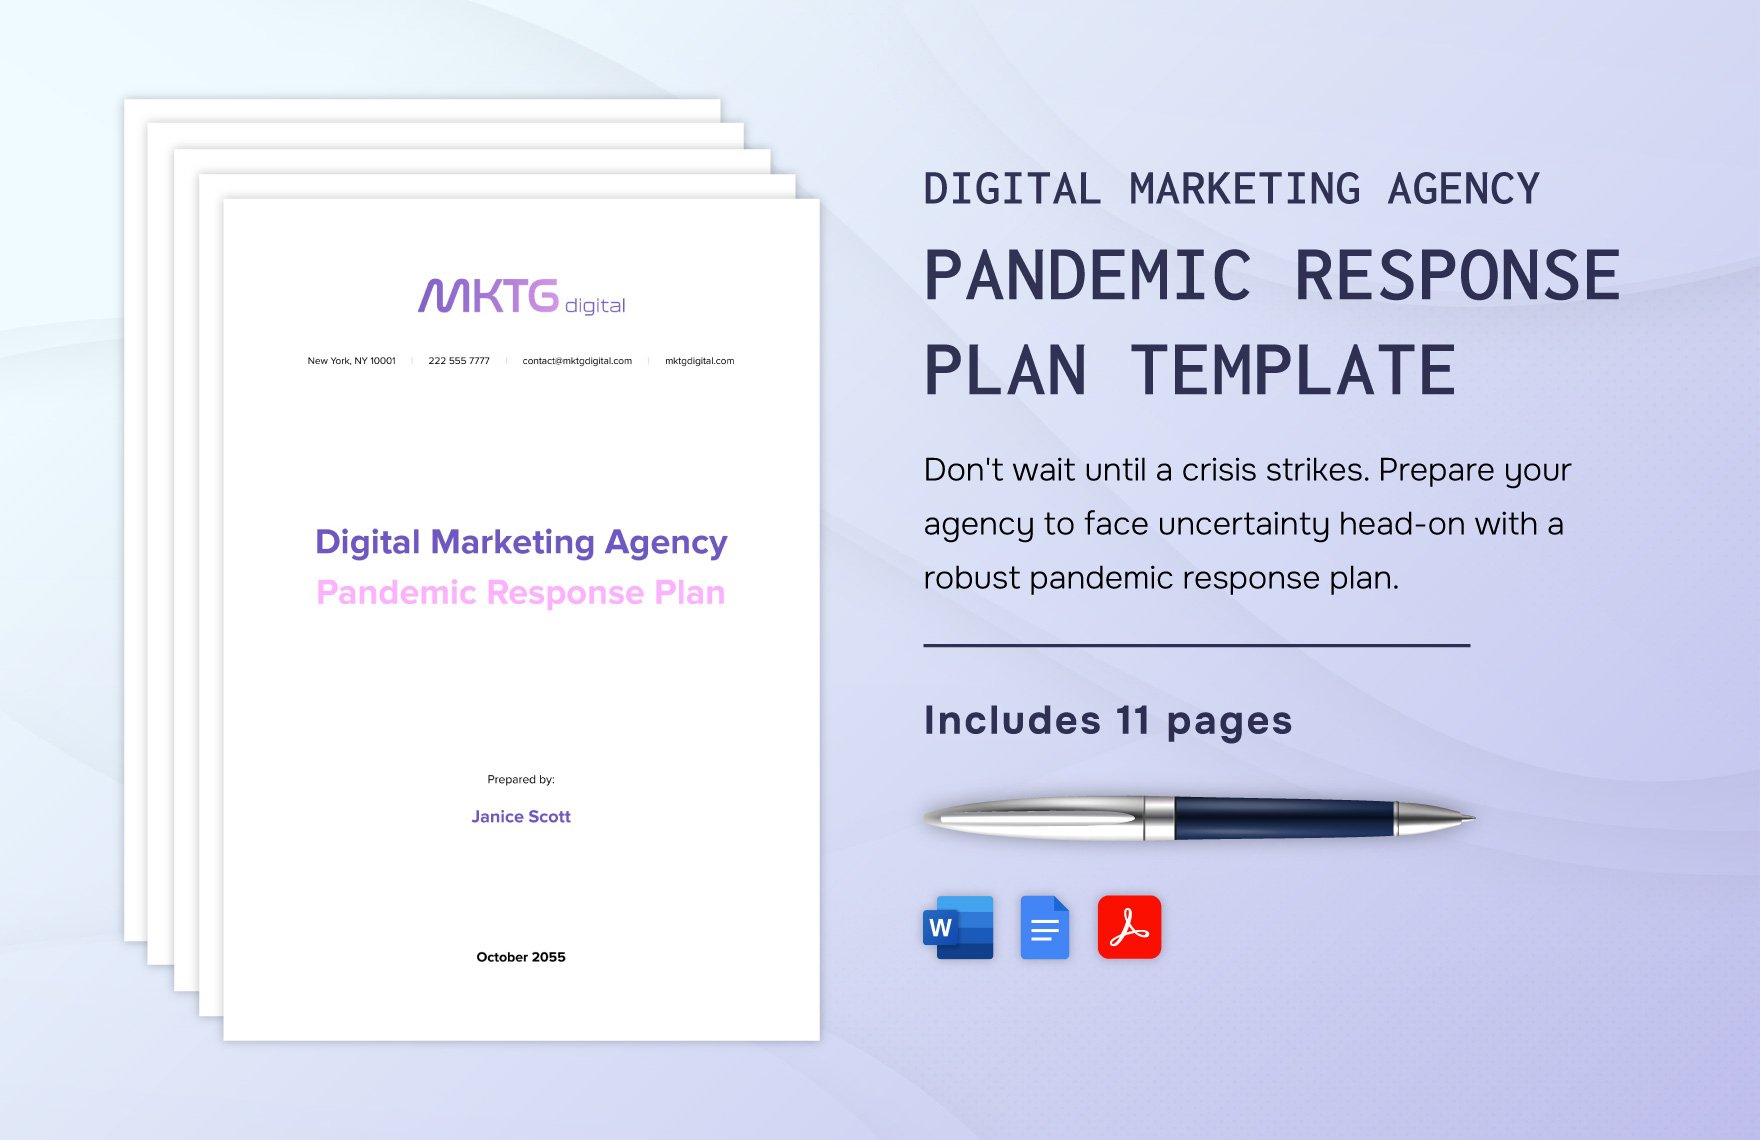 Digital Marketing Agency Pandemic Response Plan Template